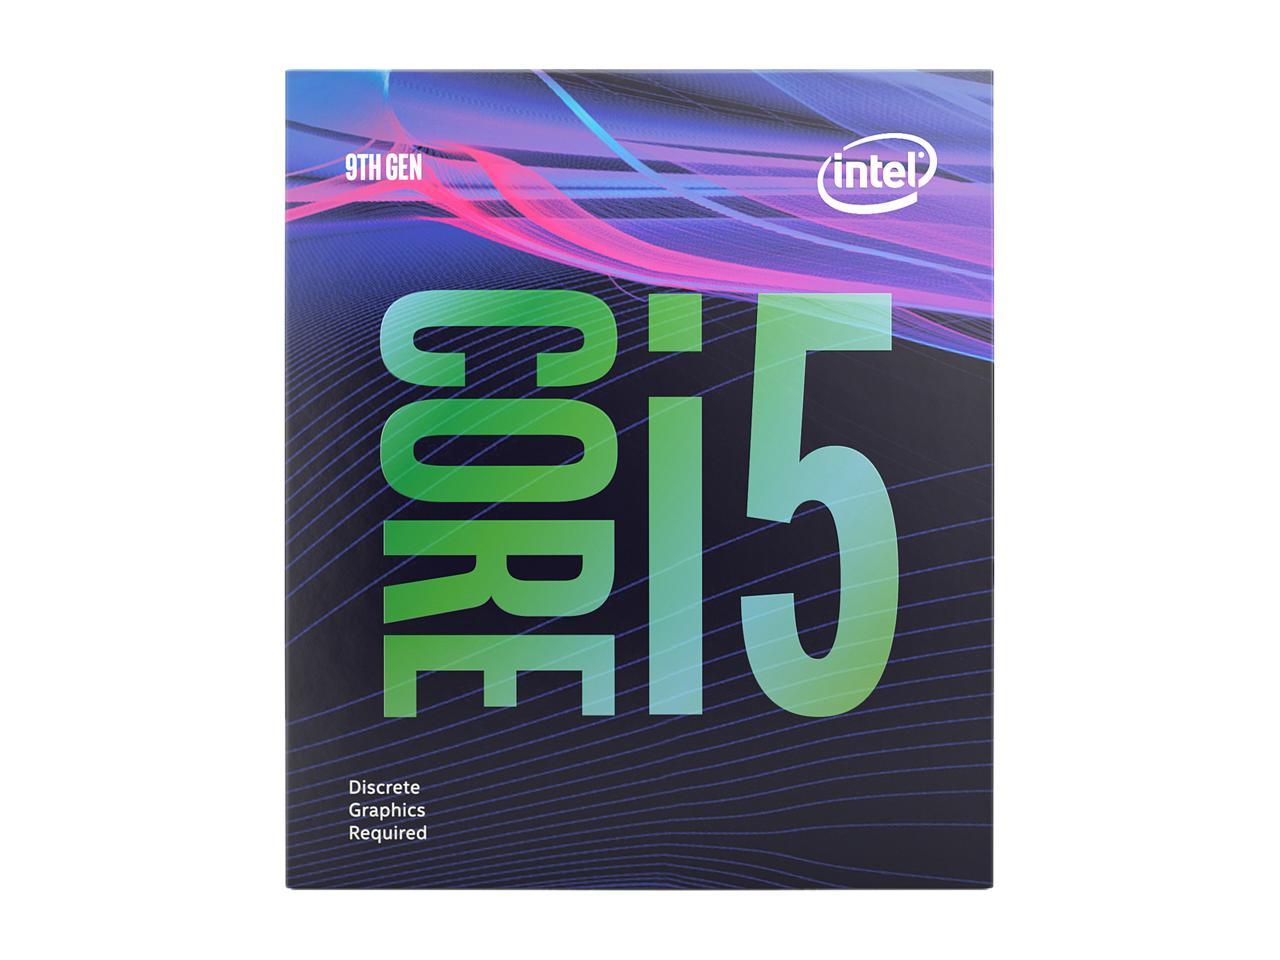 Intel Core i5-9400F Coffee Lake 6-Core 2.9 GHz (4.1 GHz Turbo) LGA 1151 (300 Series) 65W BX80684I59400F Desktop Processor Without Graphics